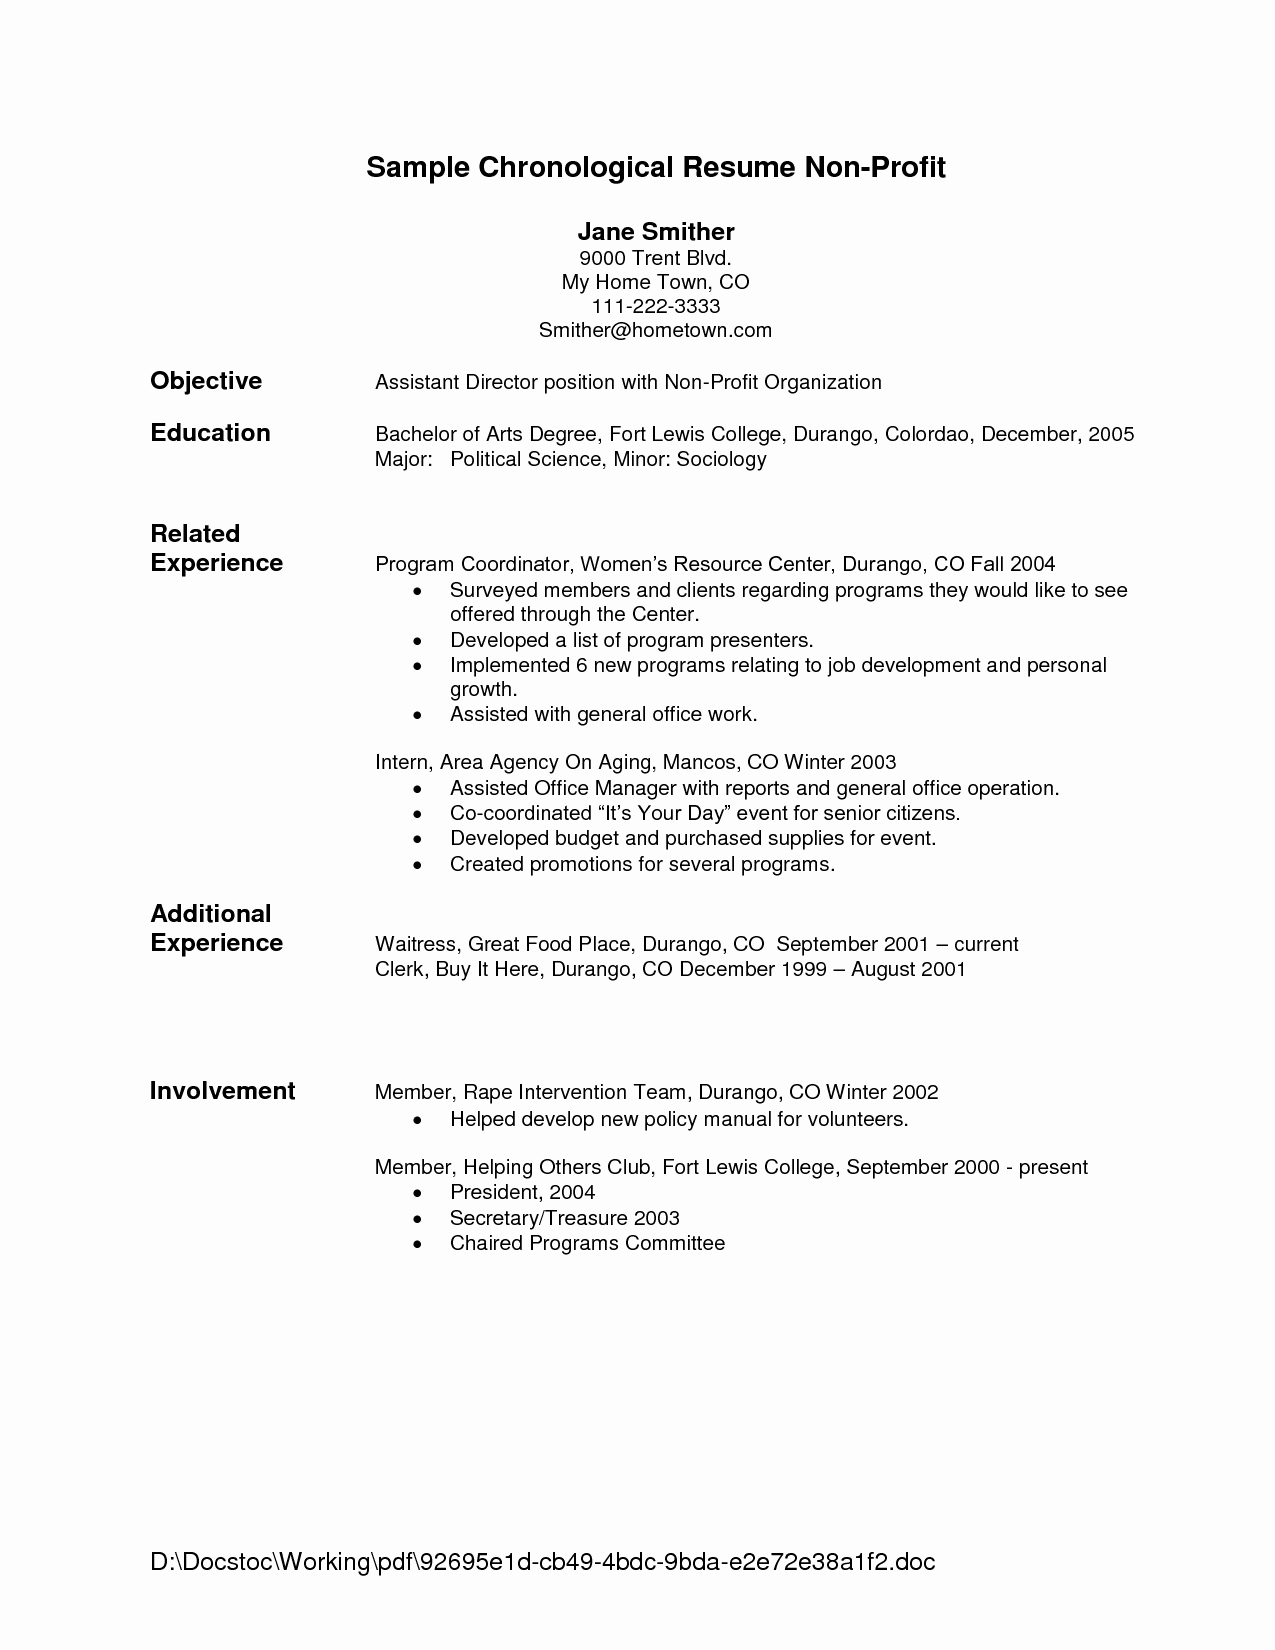 Sample Resume for Waitress Beautiful Waitress Resume Template Examples